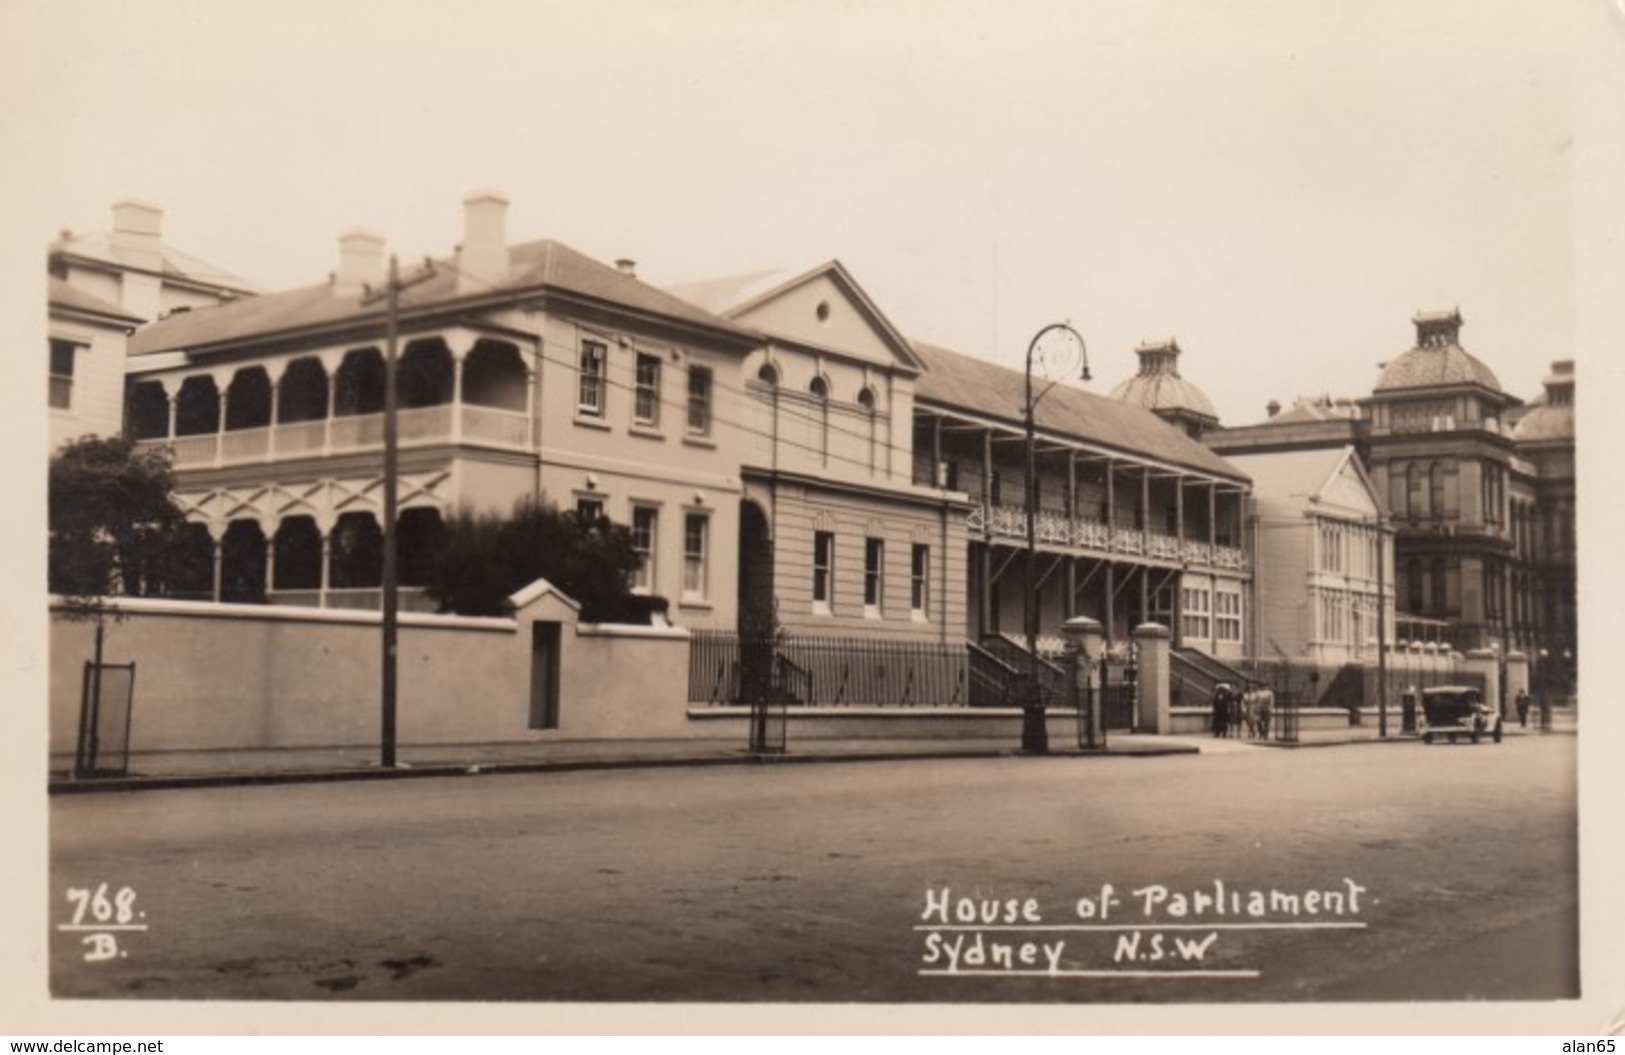 Sydney NSW Australia, House Of Parliament Government Building, C1920s/30s Vintage Real Photo Postcard - Sydney